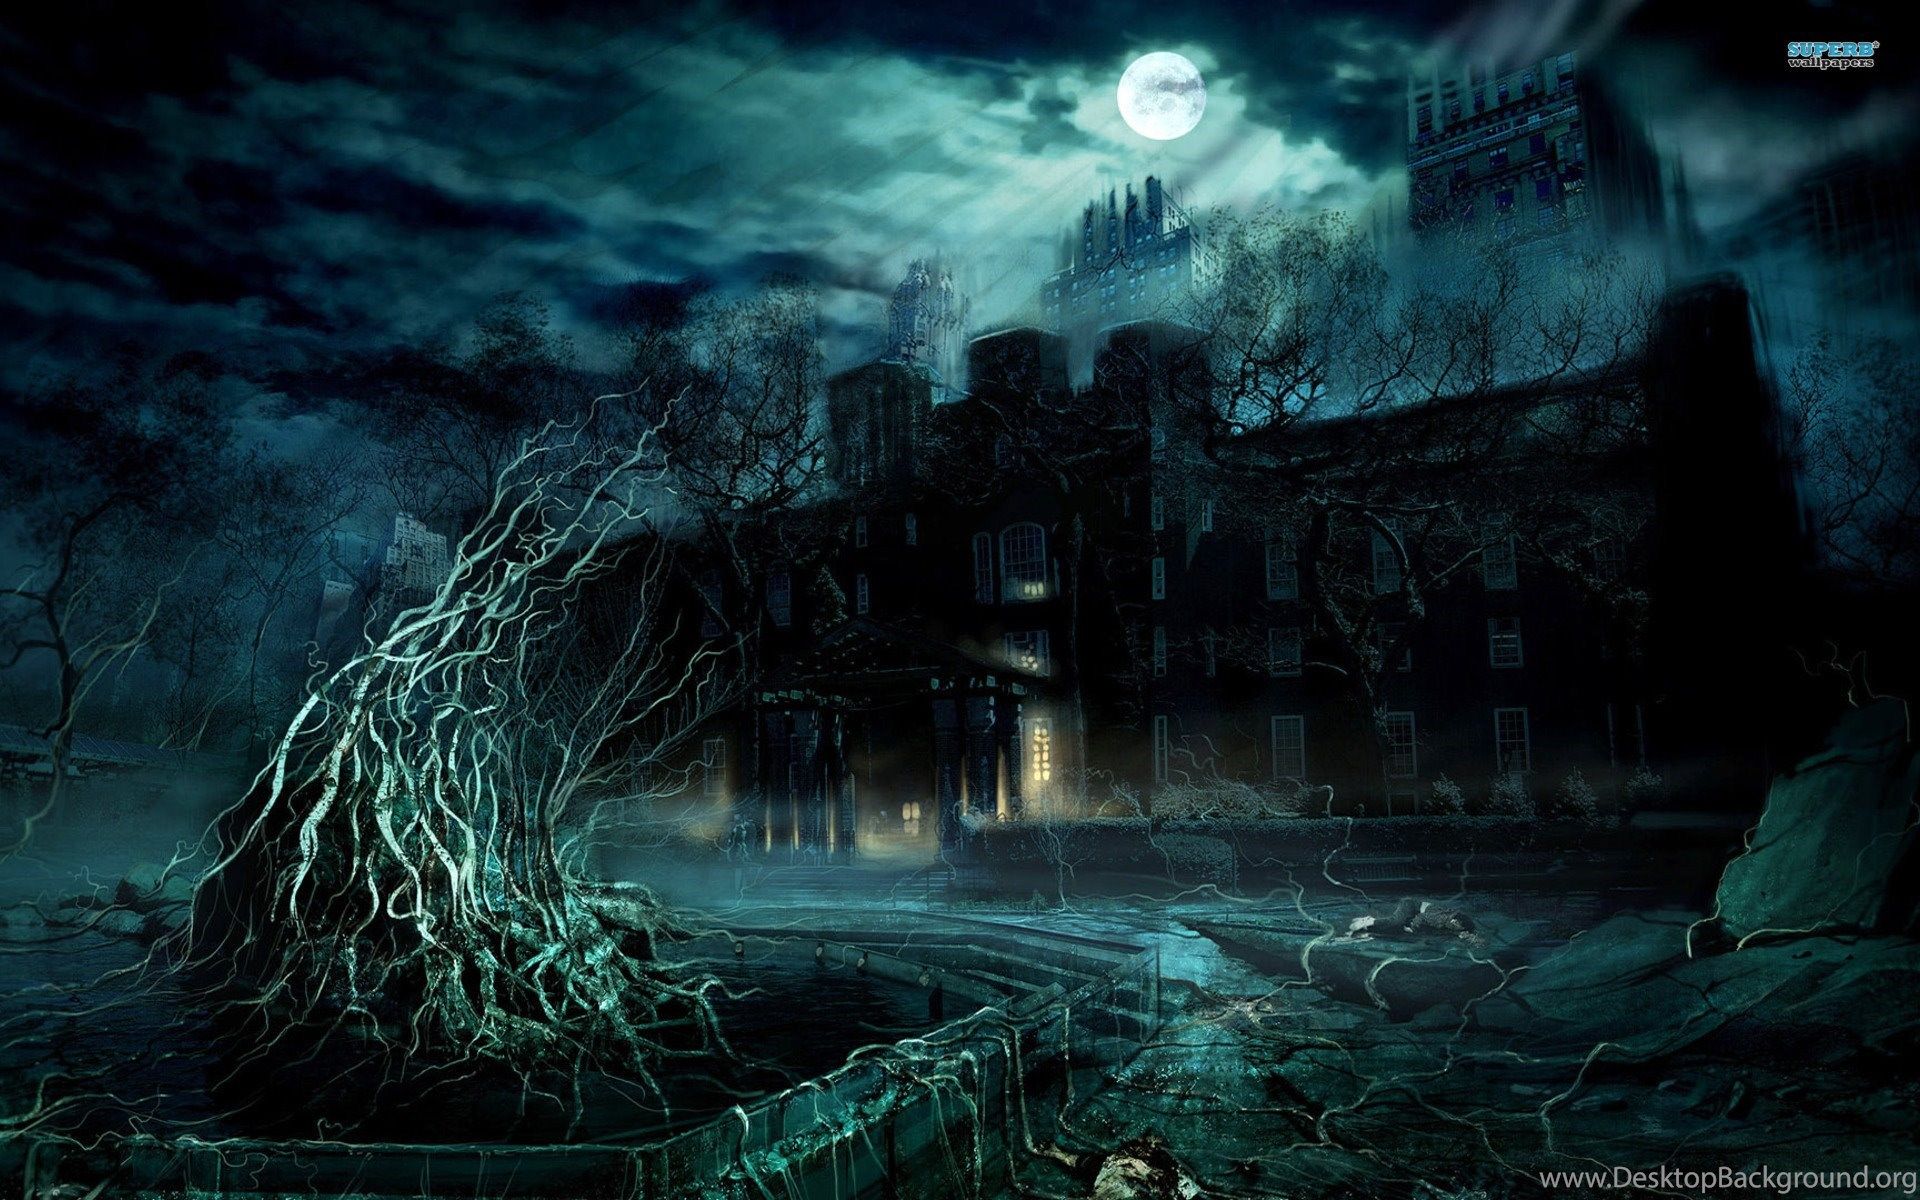 Halloween Haunted Mansion Wallpaper And Image Wallpaper. Desktop Background